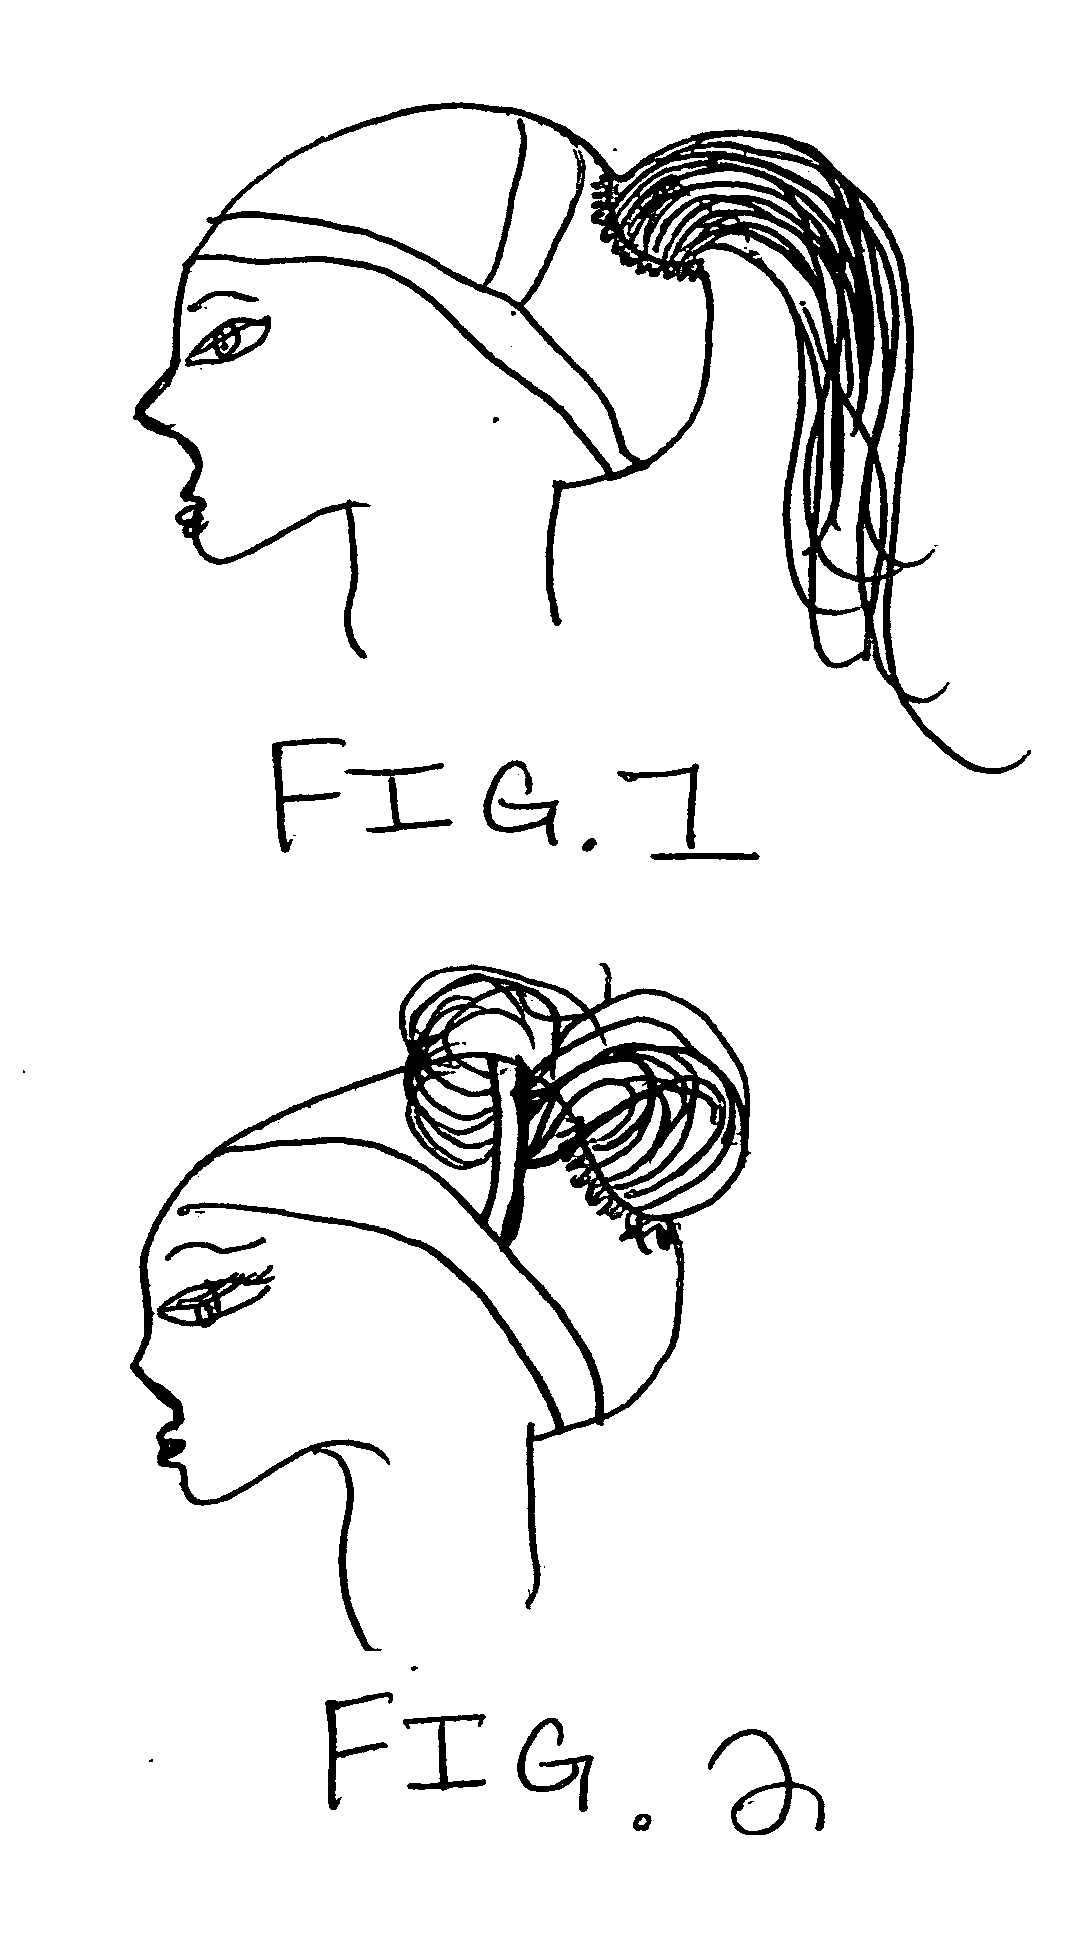 Ponytail creating head garment